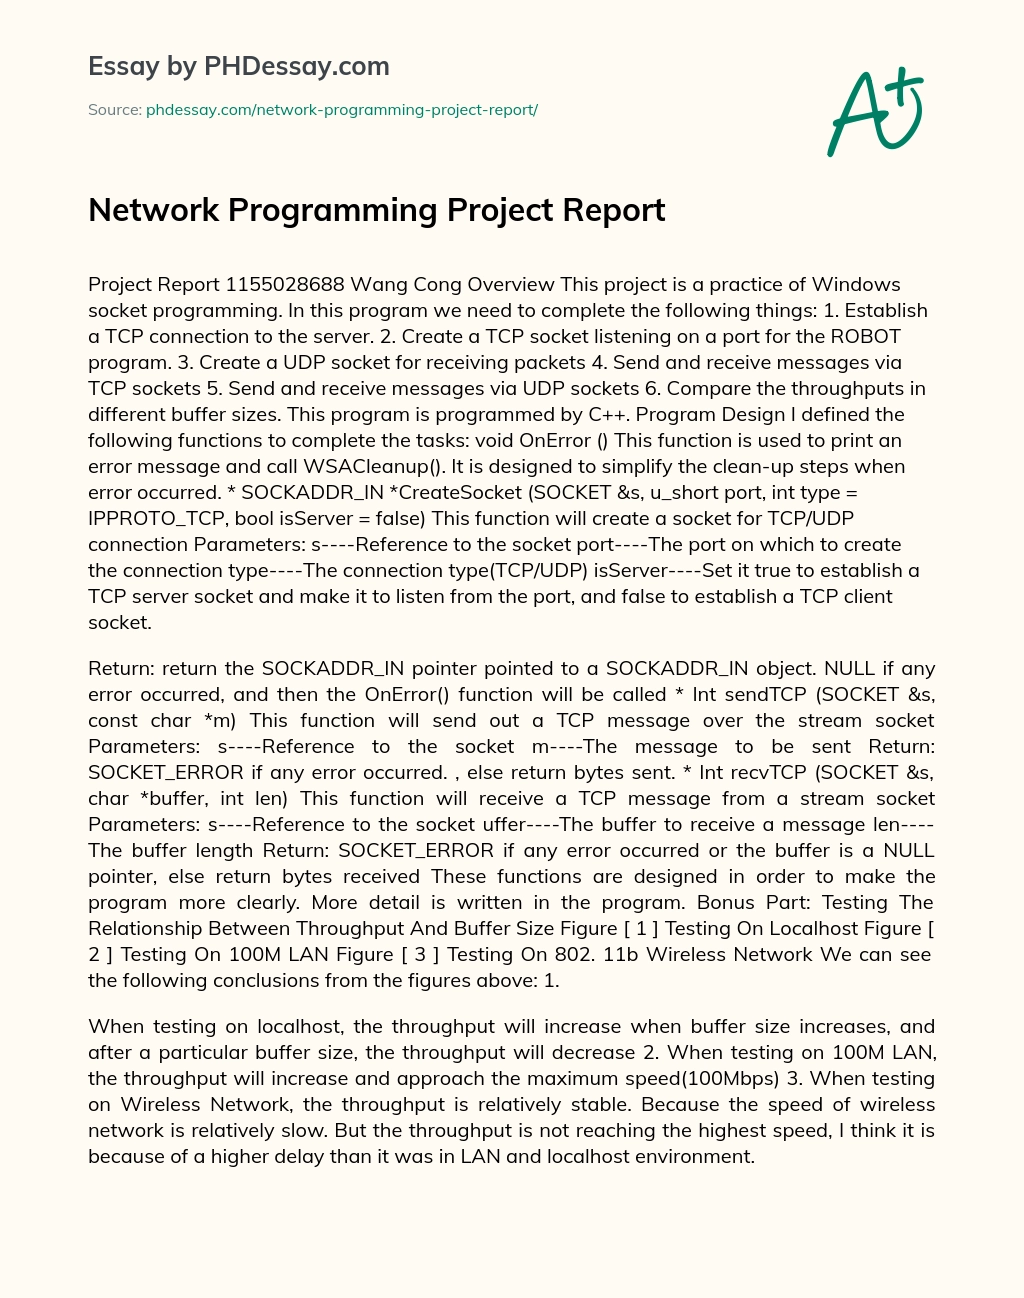 Network Programming Project Report essay